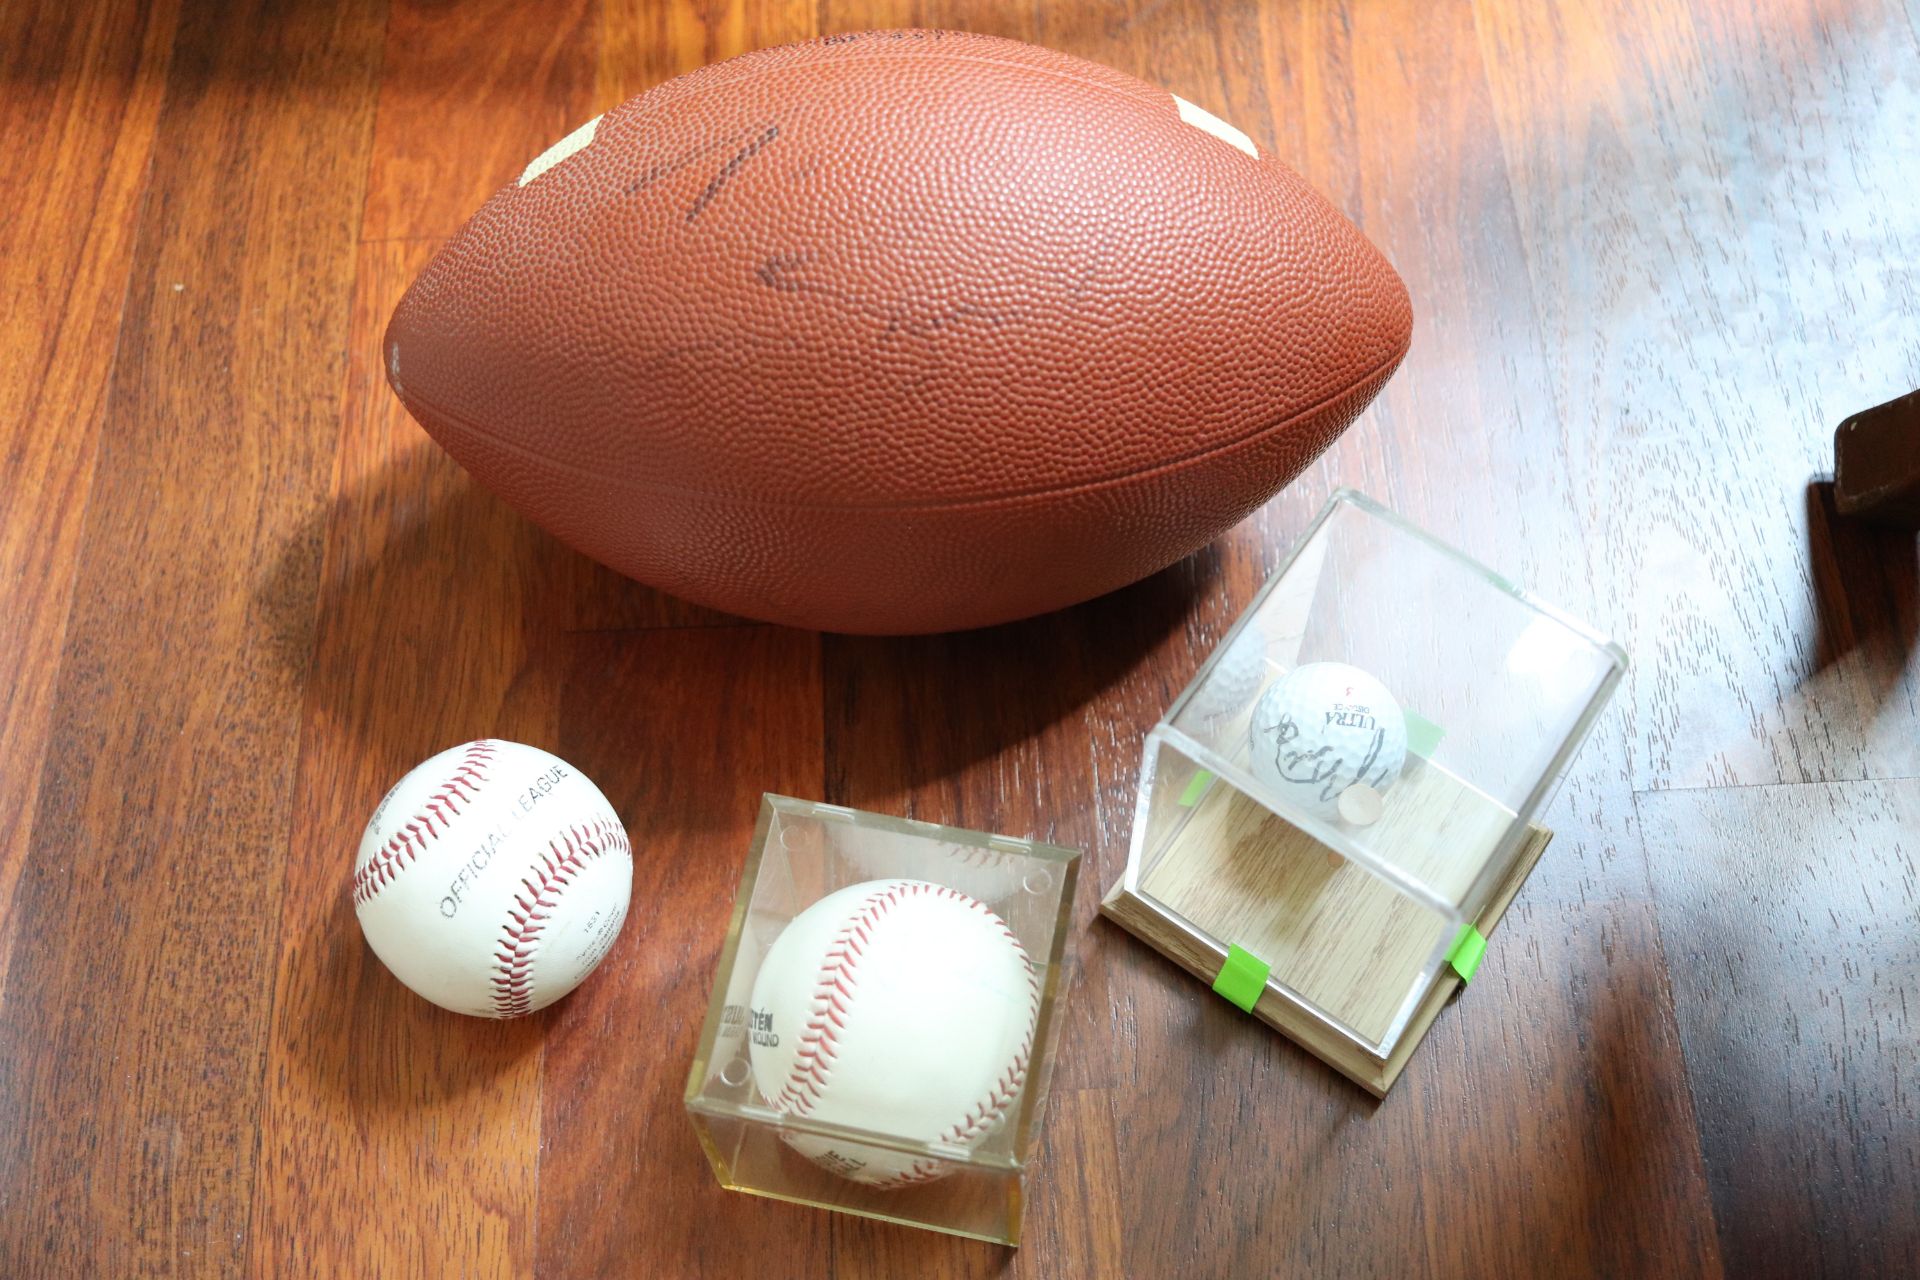 Autographed baseball, Jack Buckner, autographed ultra #1 golf ball and autographed football